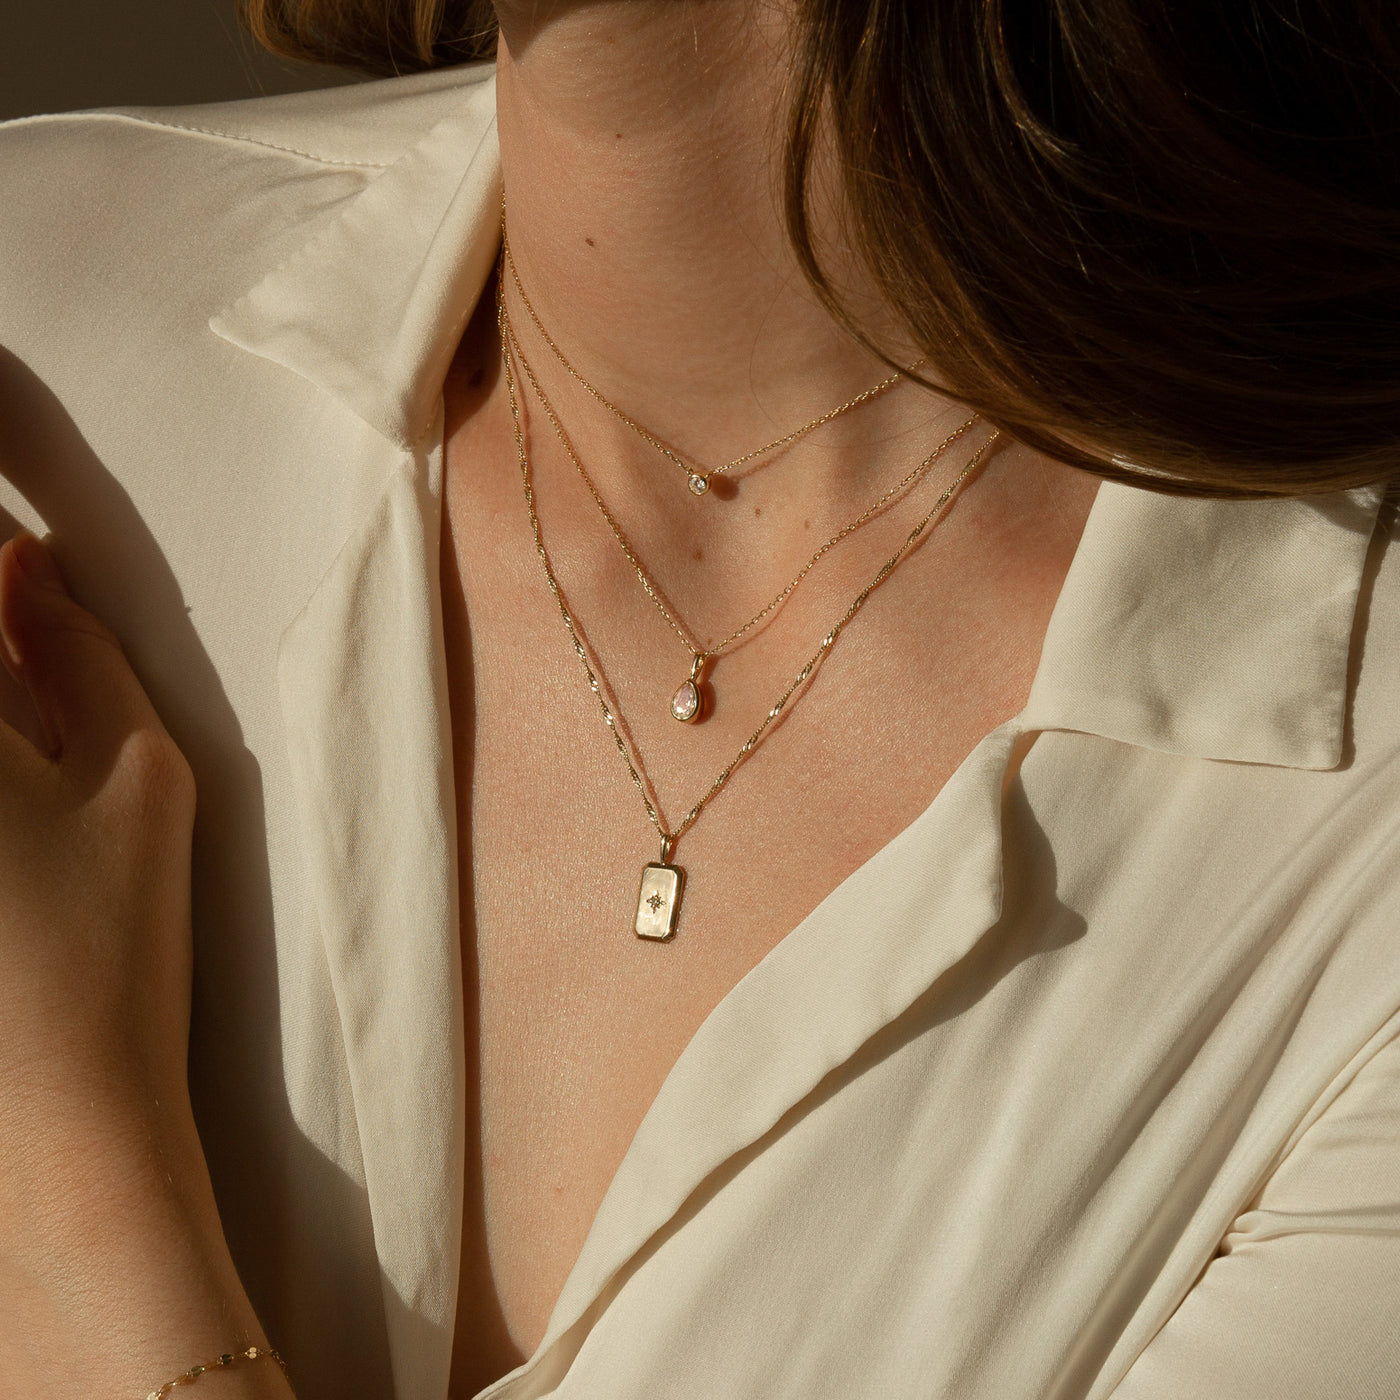 Sapphire Teardrop Necklace | Simple & Dainty Jewelry